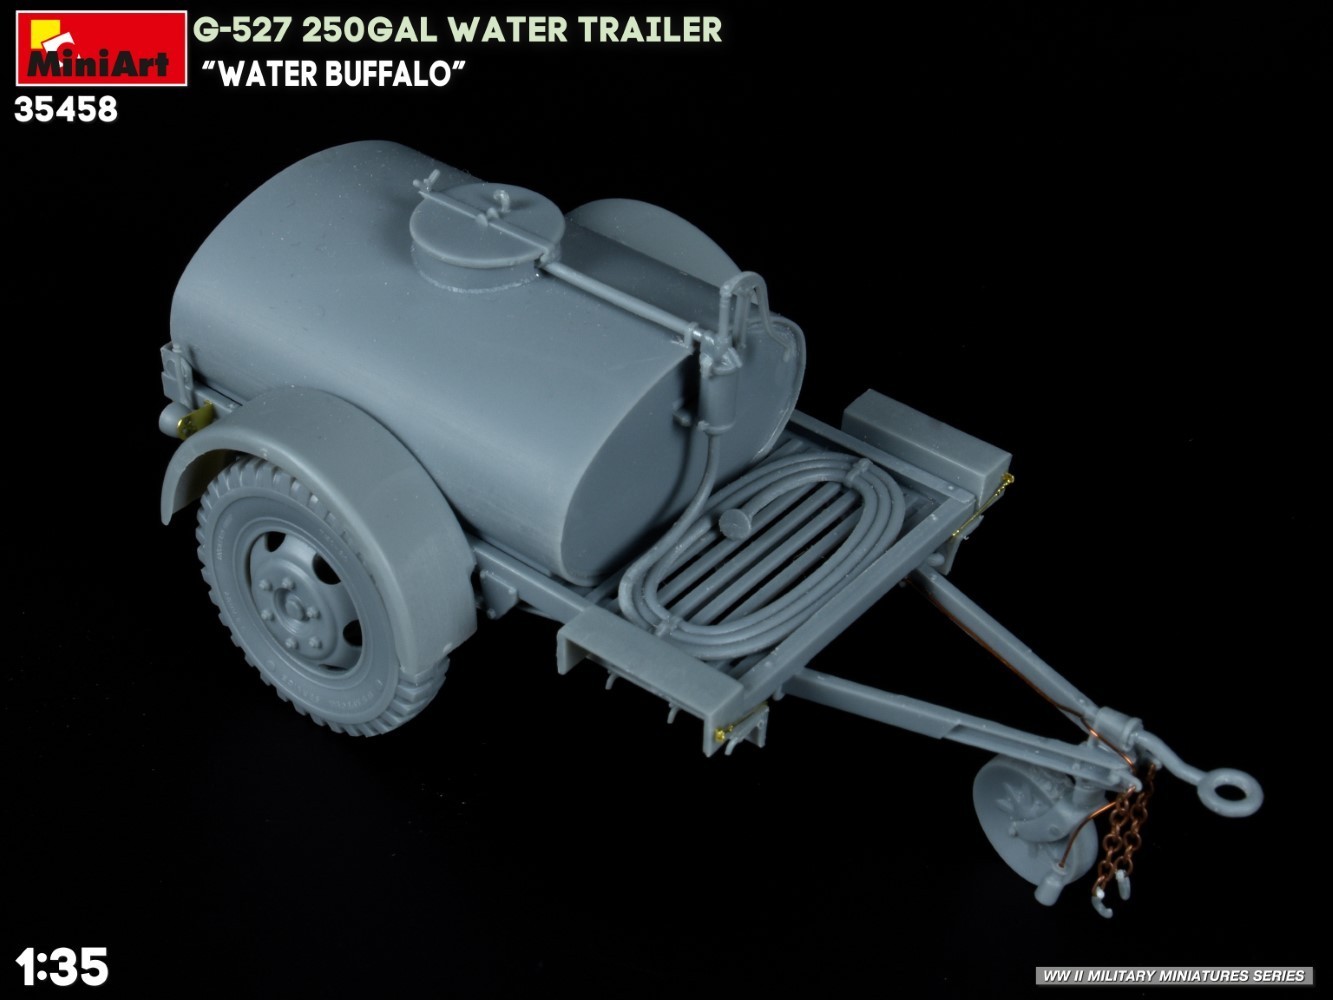 MiniArt G-527 250GAL Water Trailer “Water Buffalo” Test Build-9